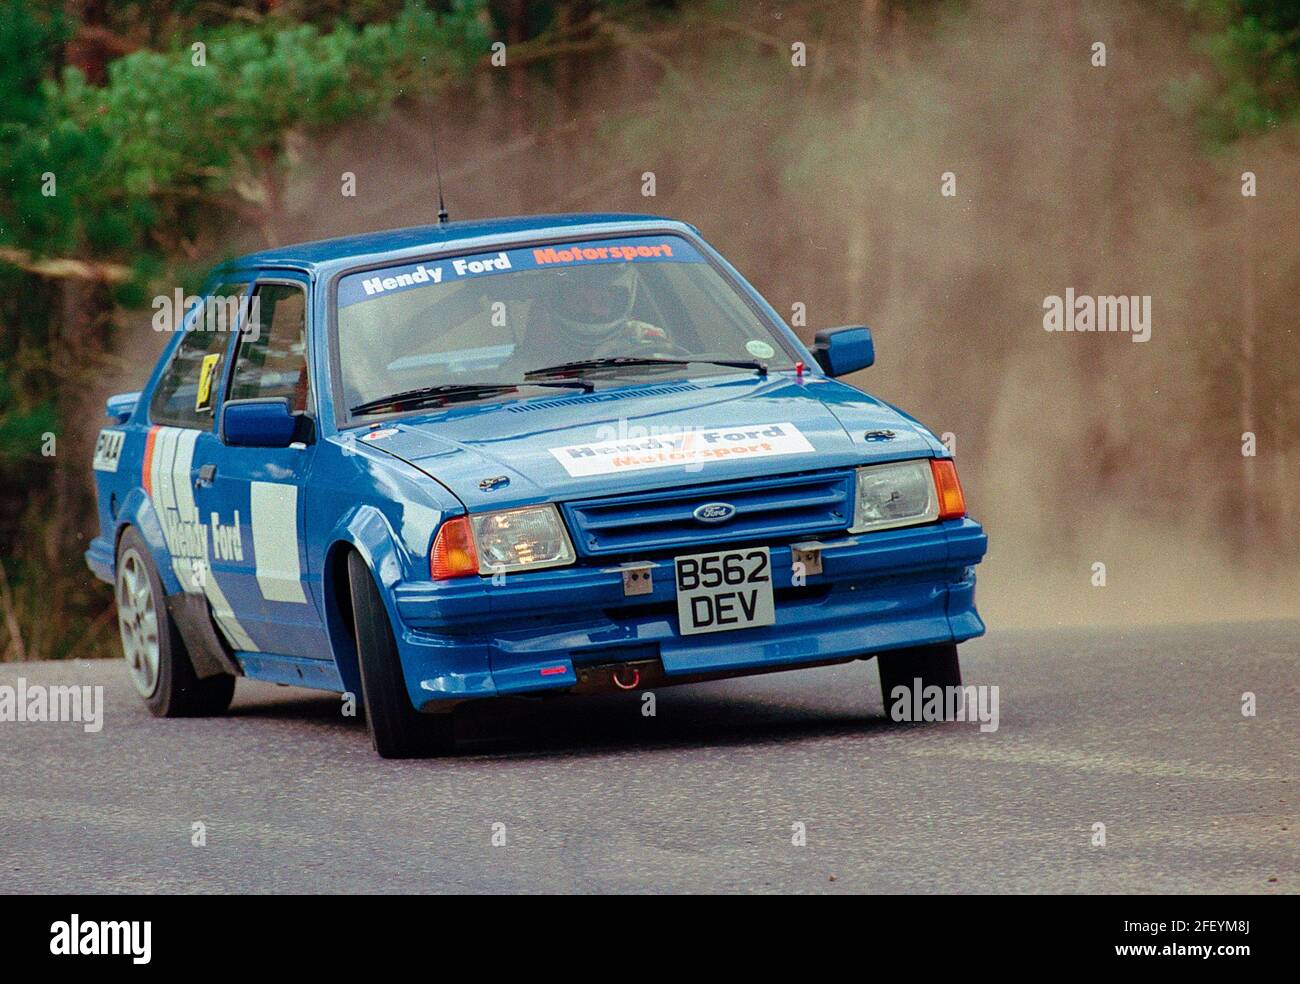 Hendy Ford sponsored Mk3 escort on rally stage at Avon Park 1993 Stock Photo